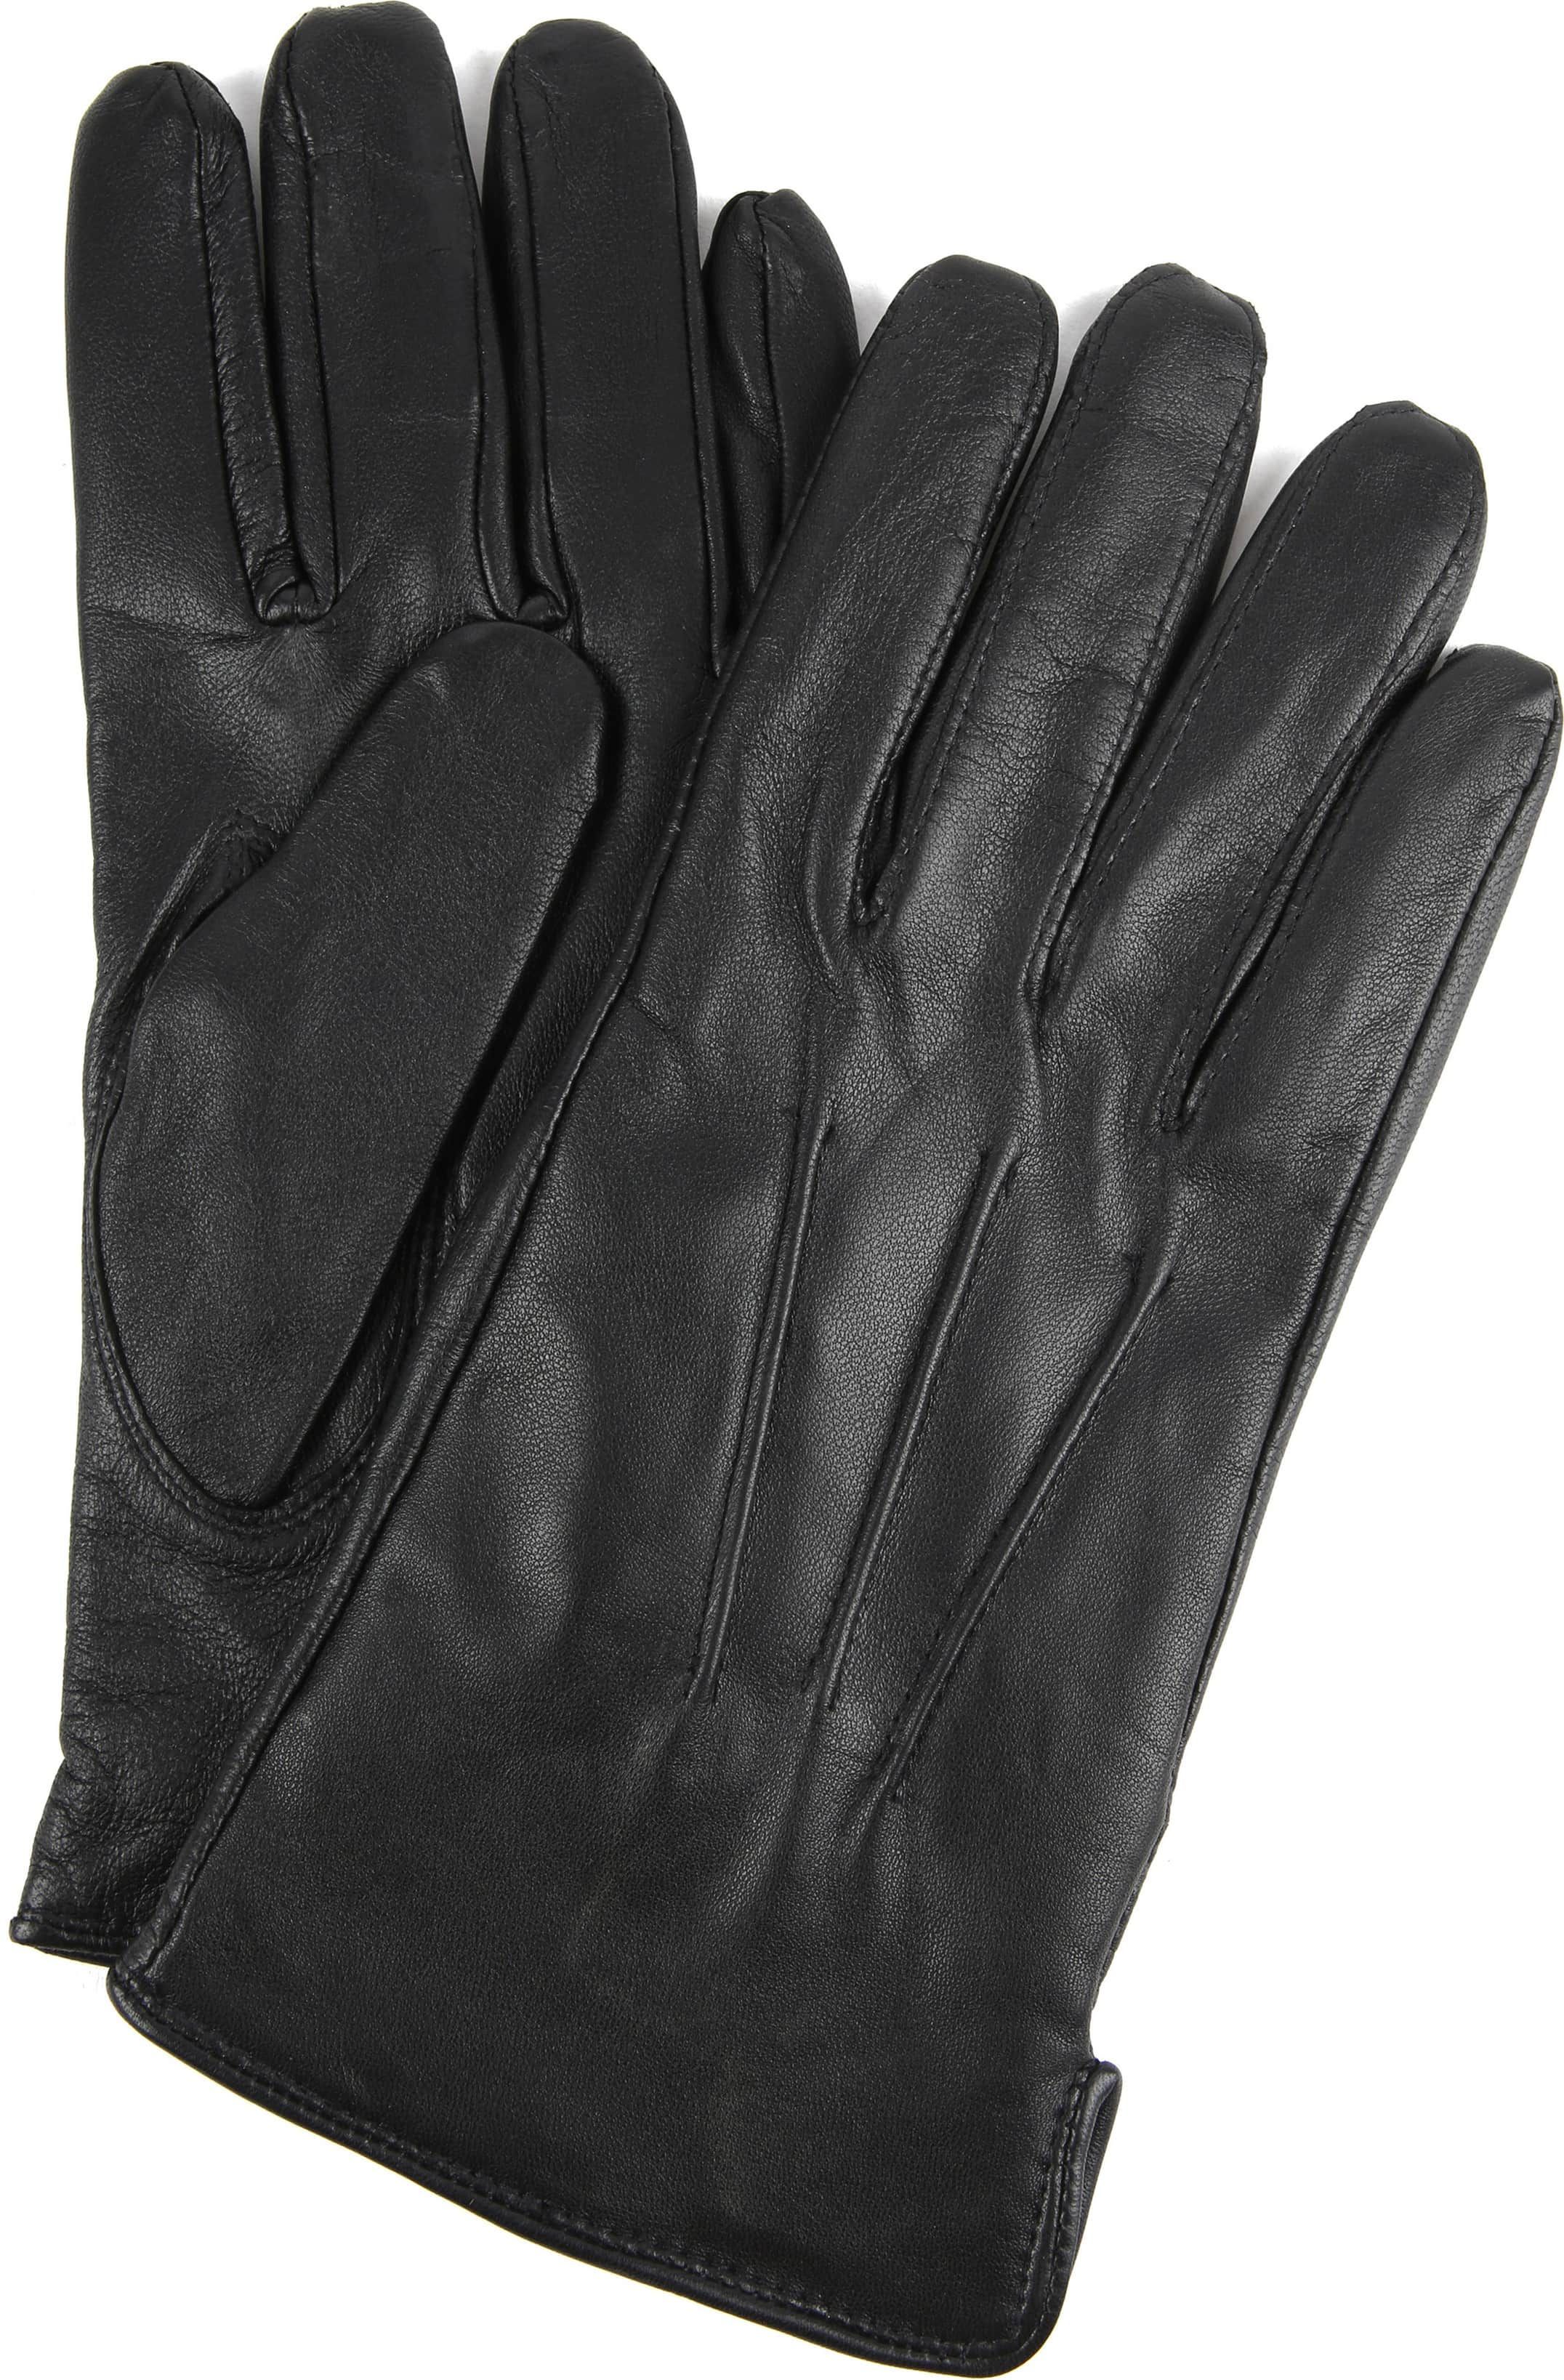 Laimbock Edinburgh Gloves Black size 9